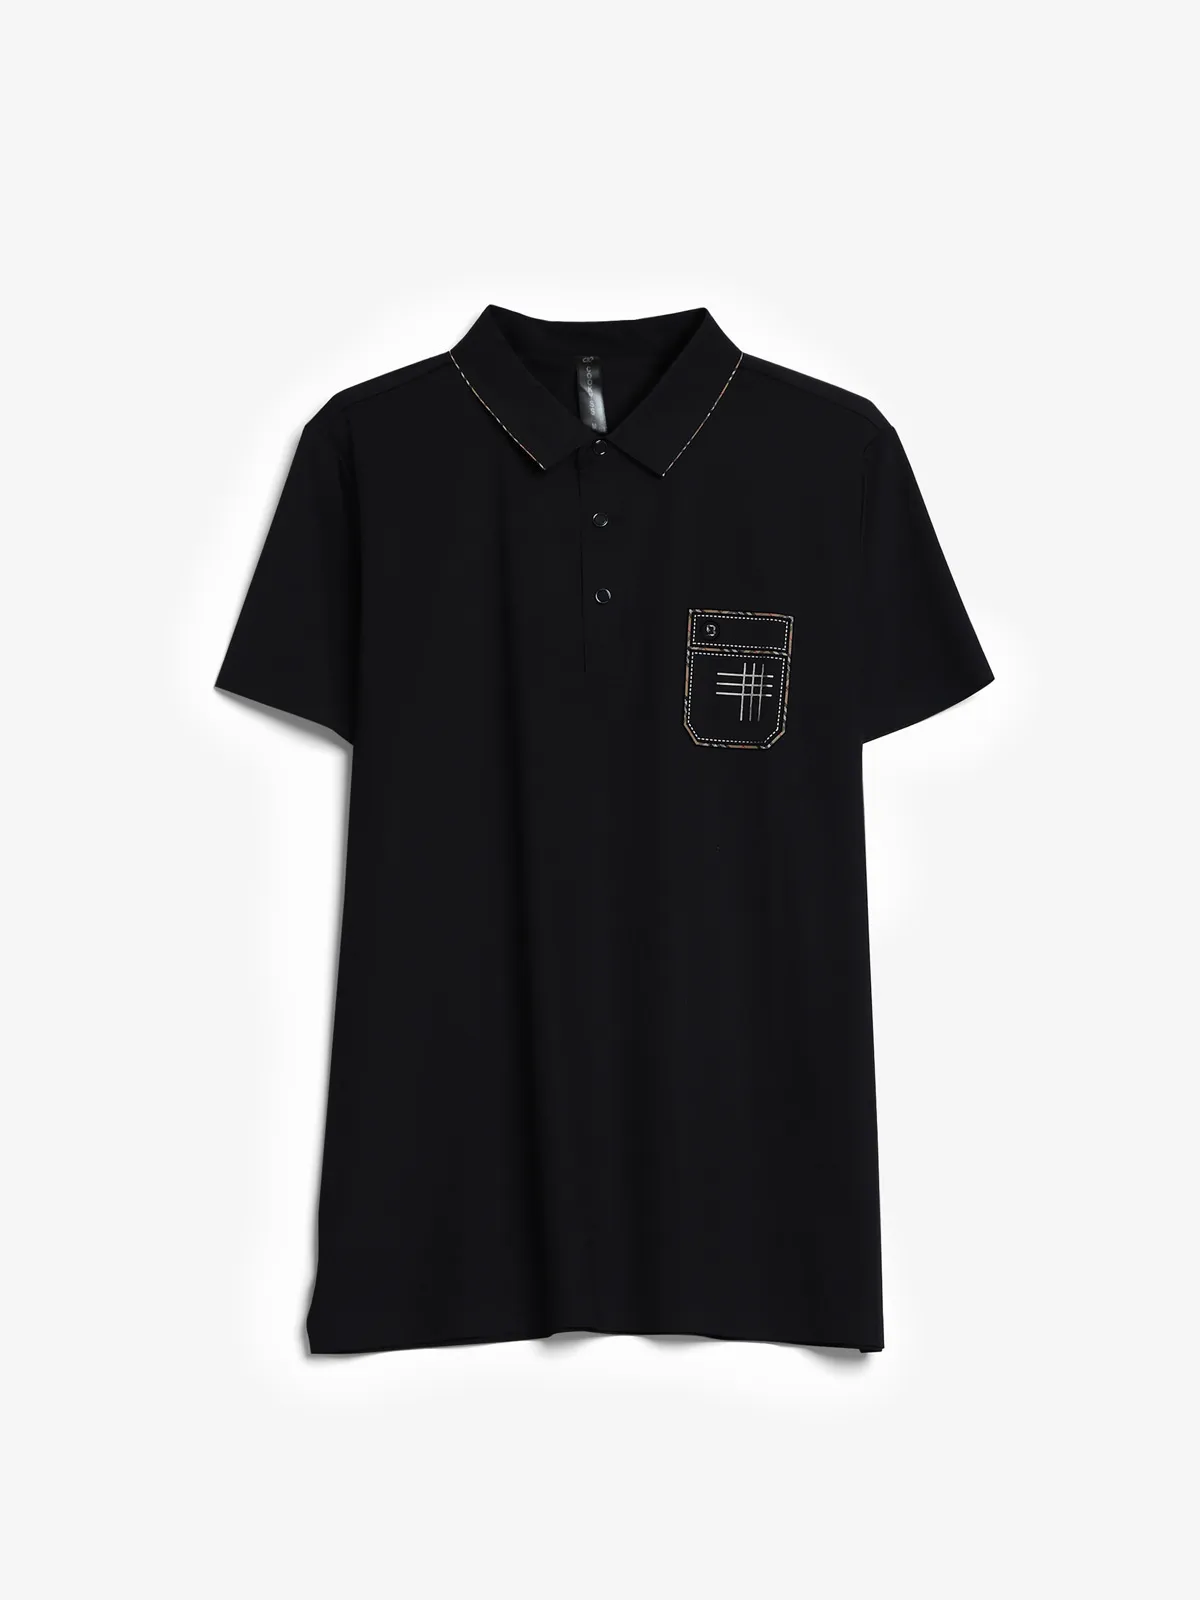 Cookyss plain black cotton polo t shirt